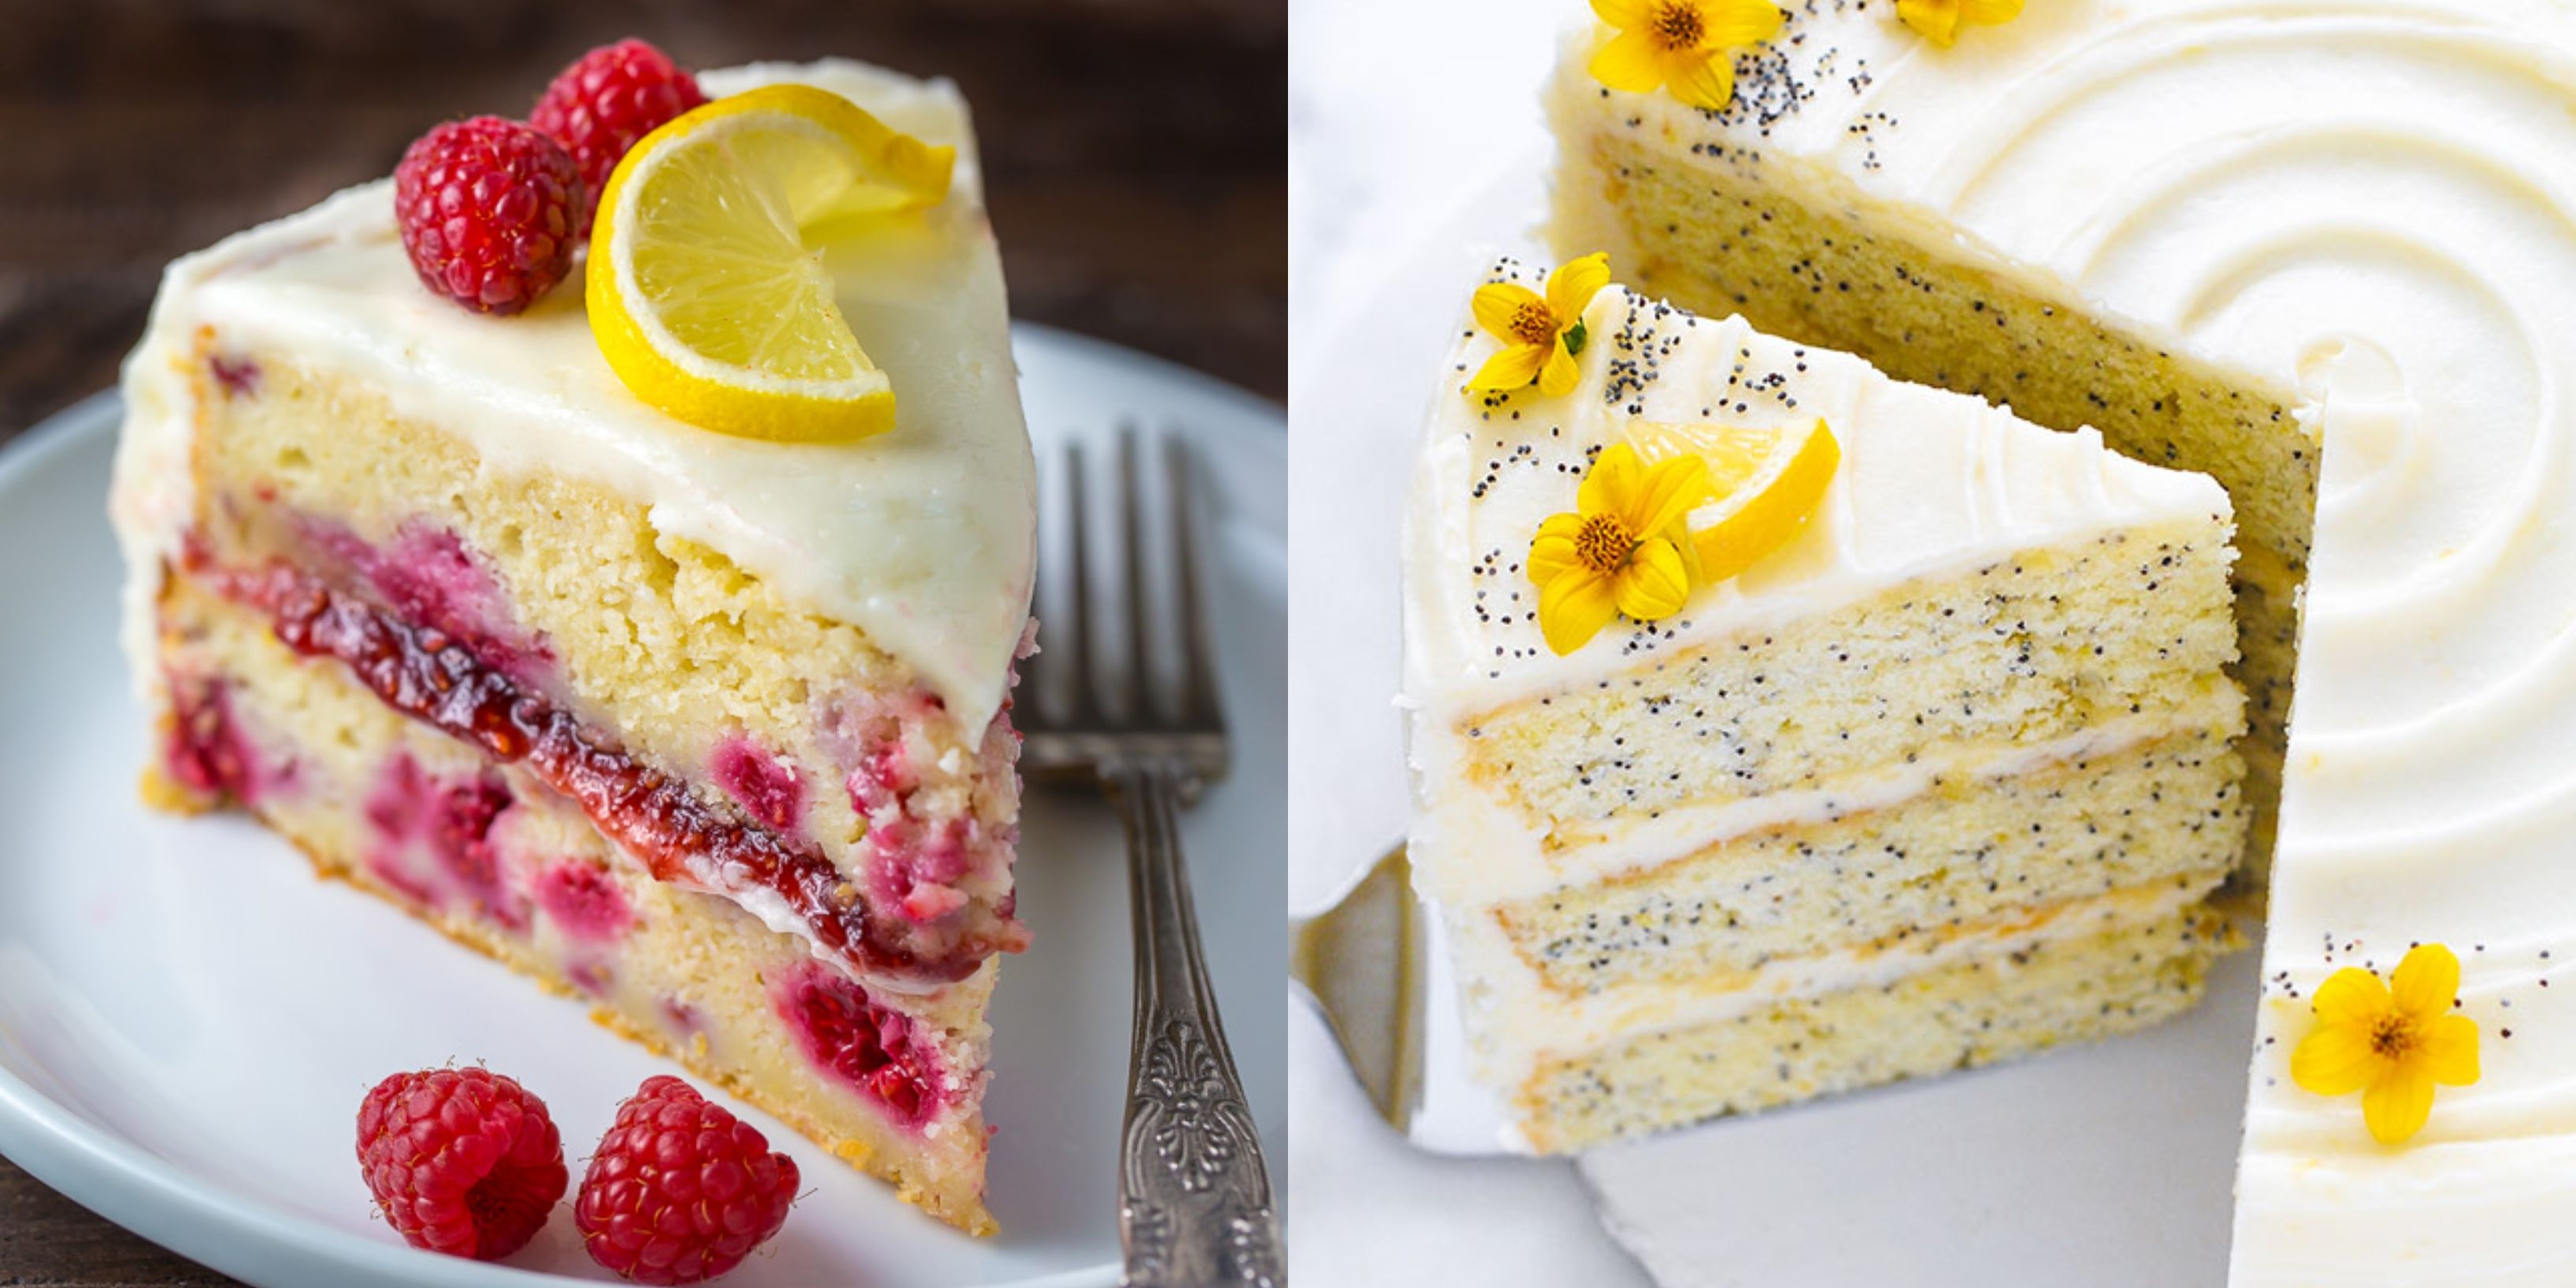 Best summer cake recipes | Baking recipes